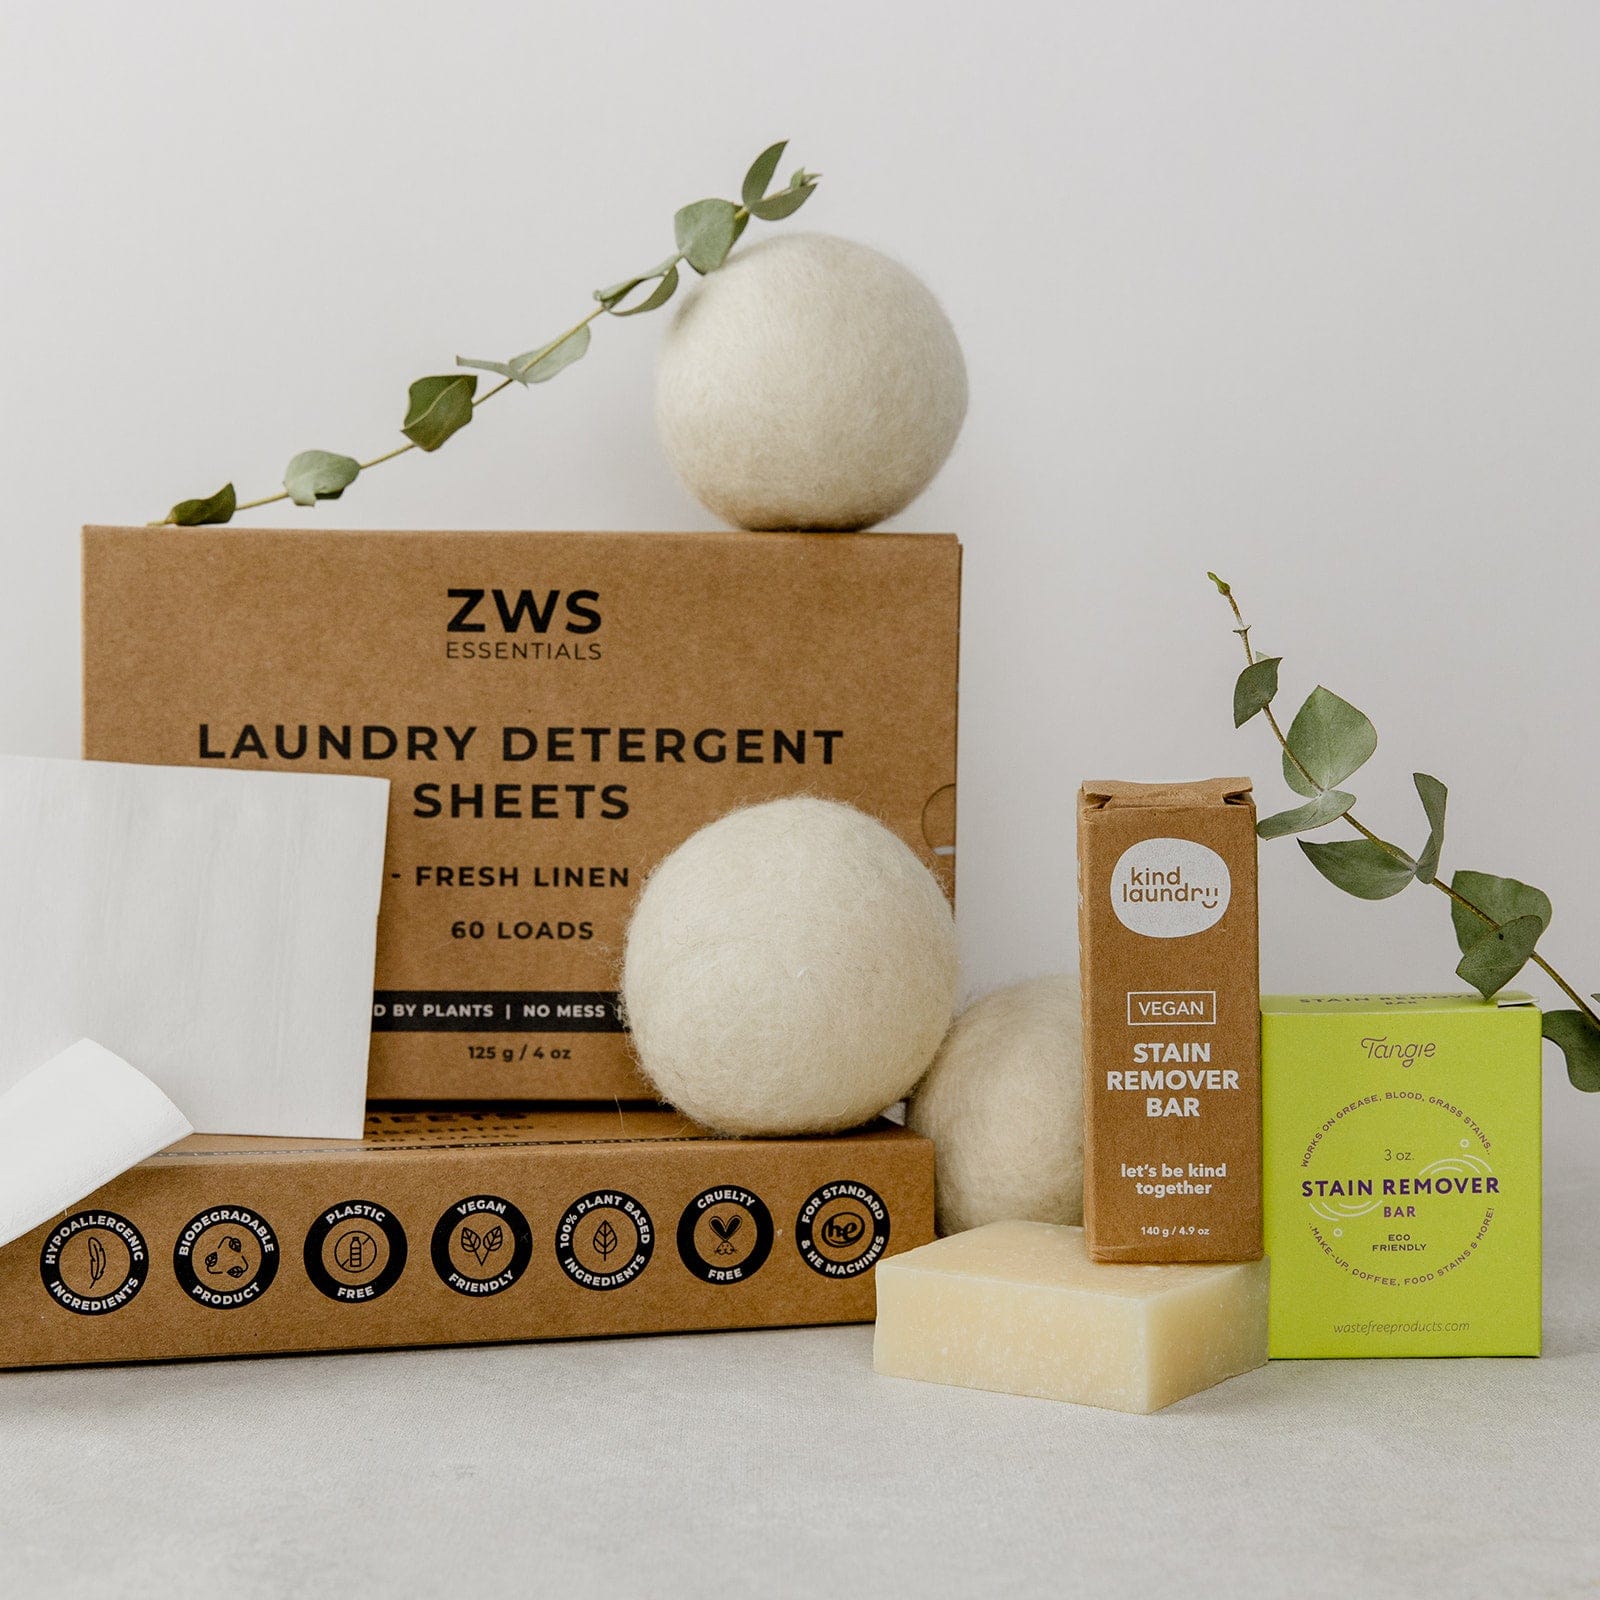 ZWS Essentials Laundry Detergent Sheets - Zero Waste Laundry Sheets - 60  Loads